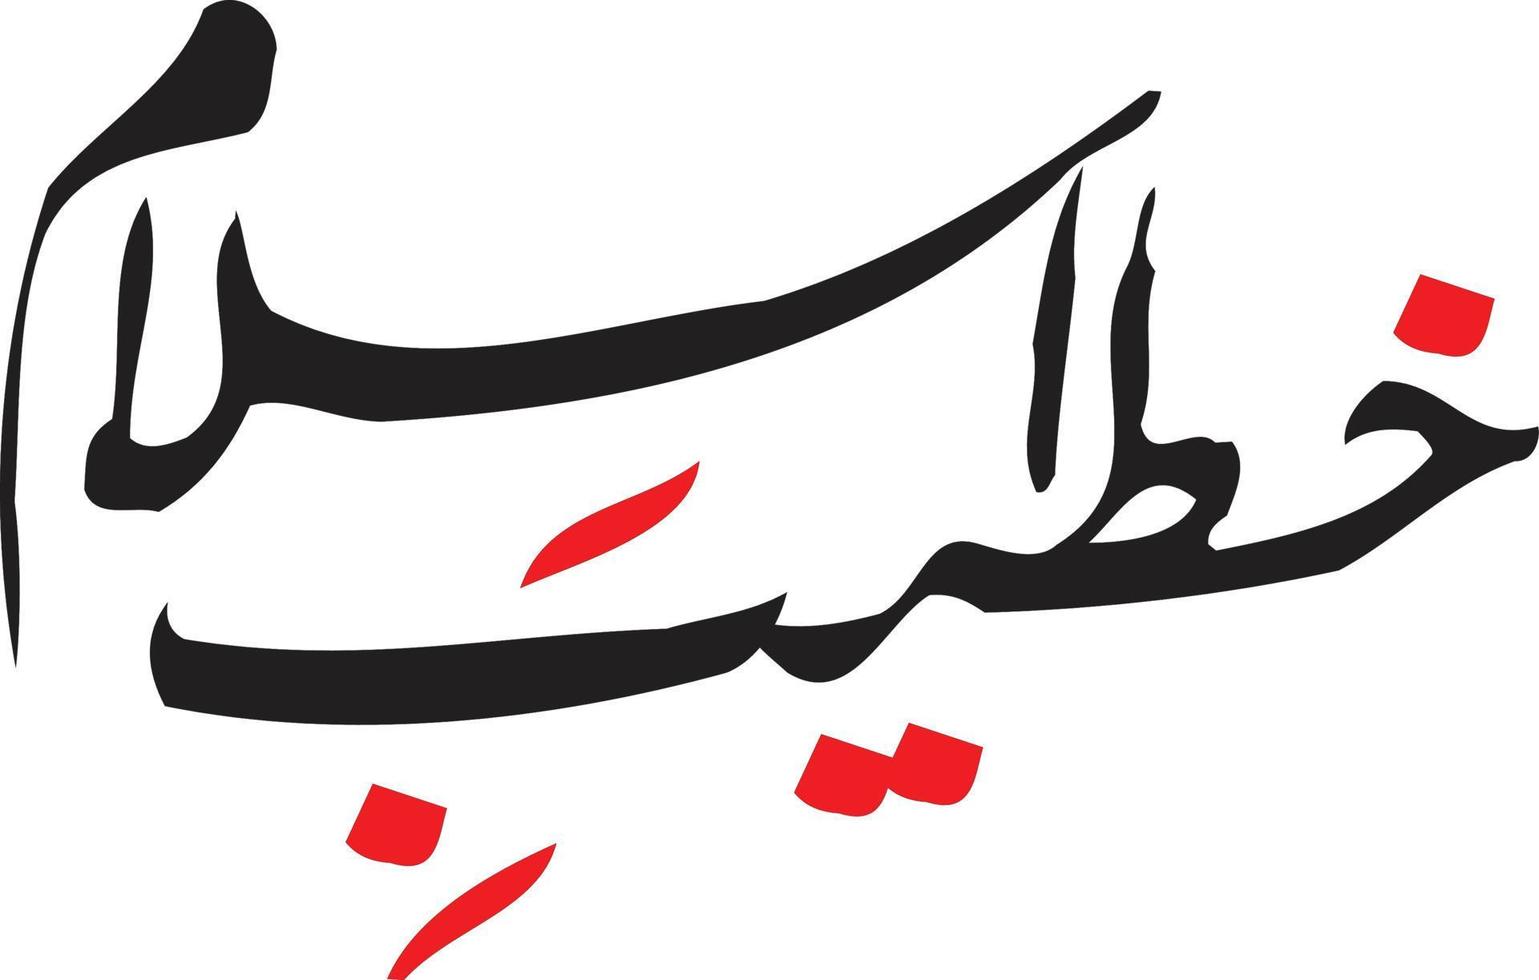 khteeb islam título caligrafia árabe urdu islâmica vetor livre